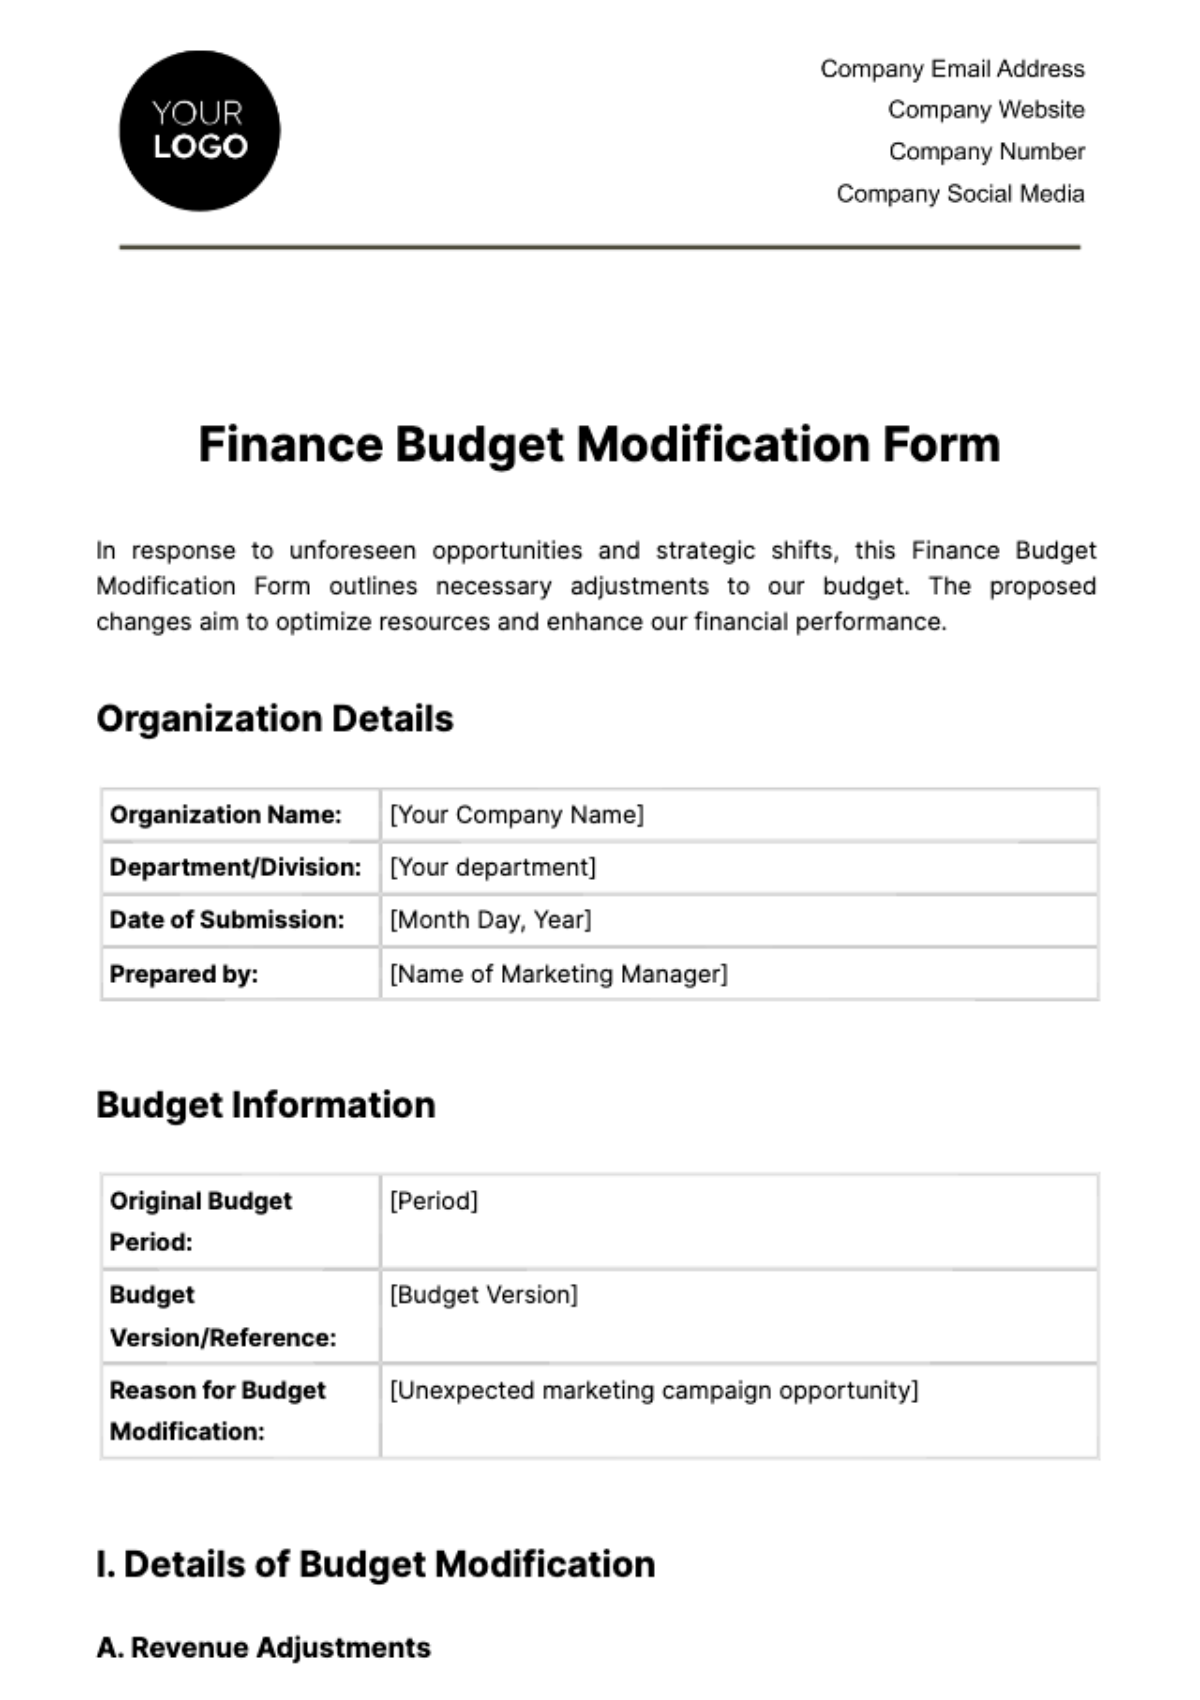 Finance Budget Modification Form Template